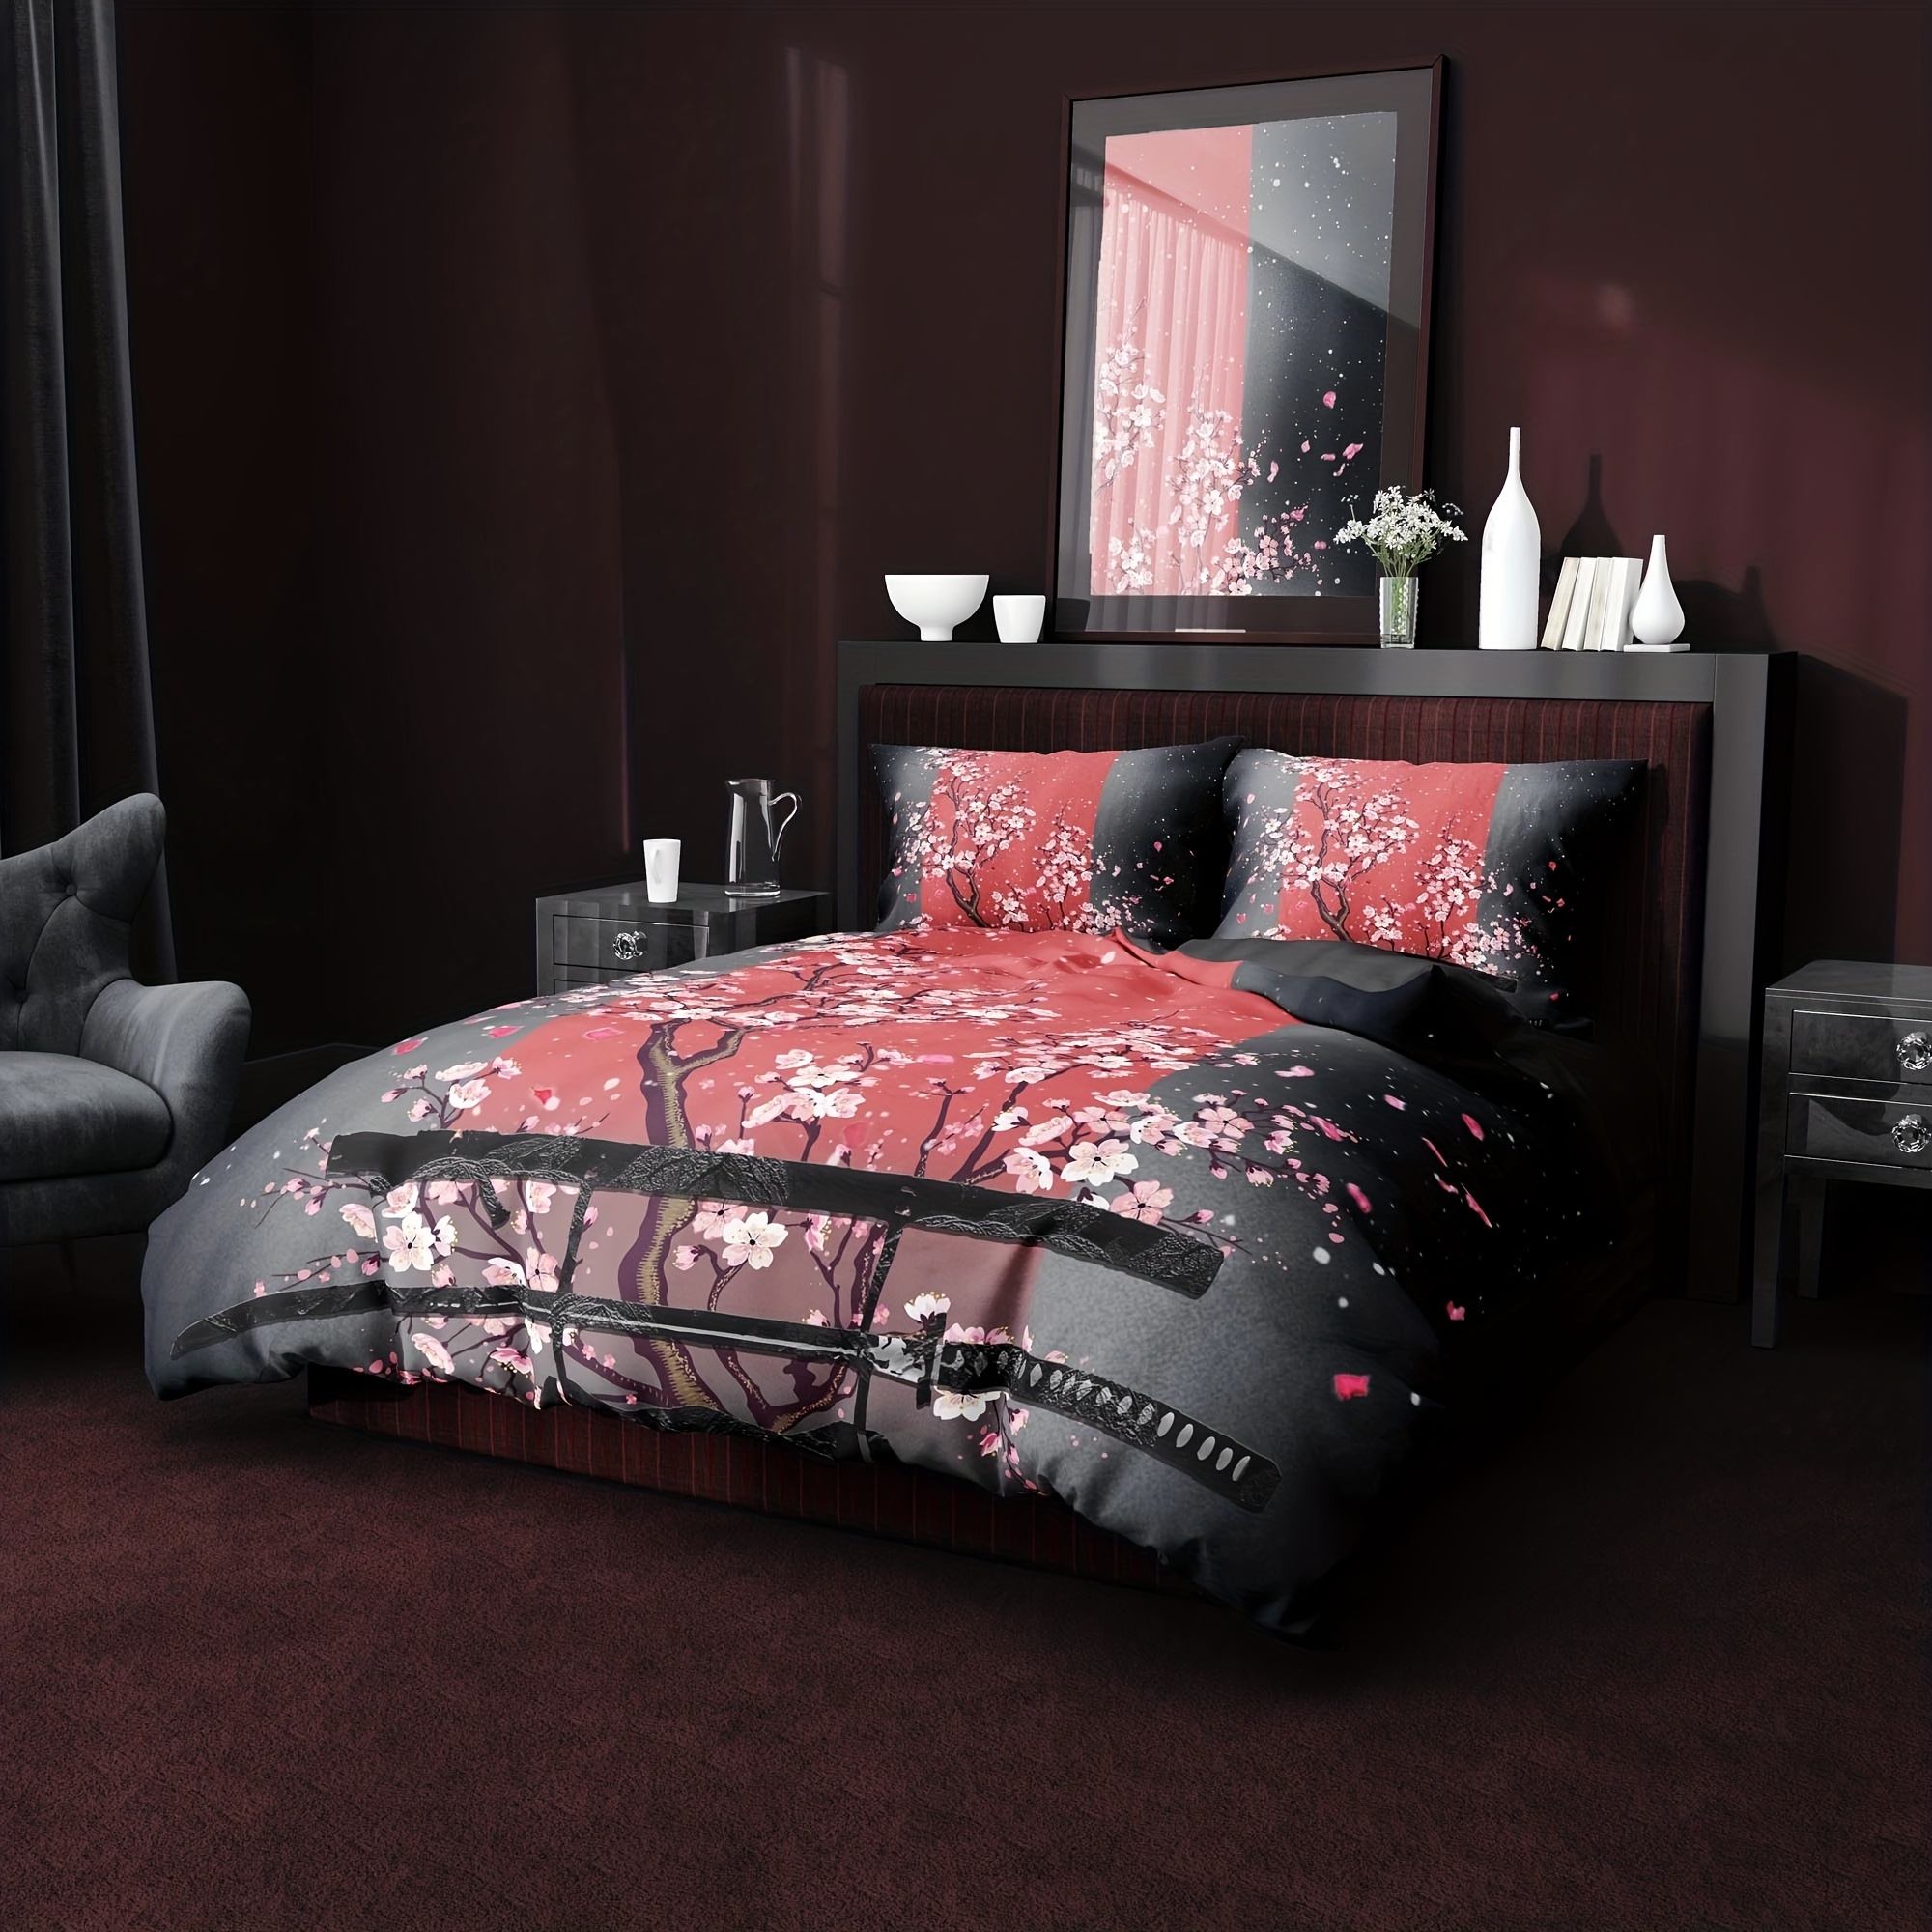 7 Piece - Bedspread Comforter - Bedding